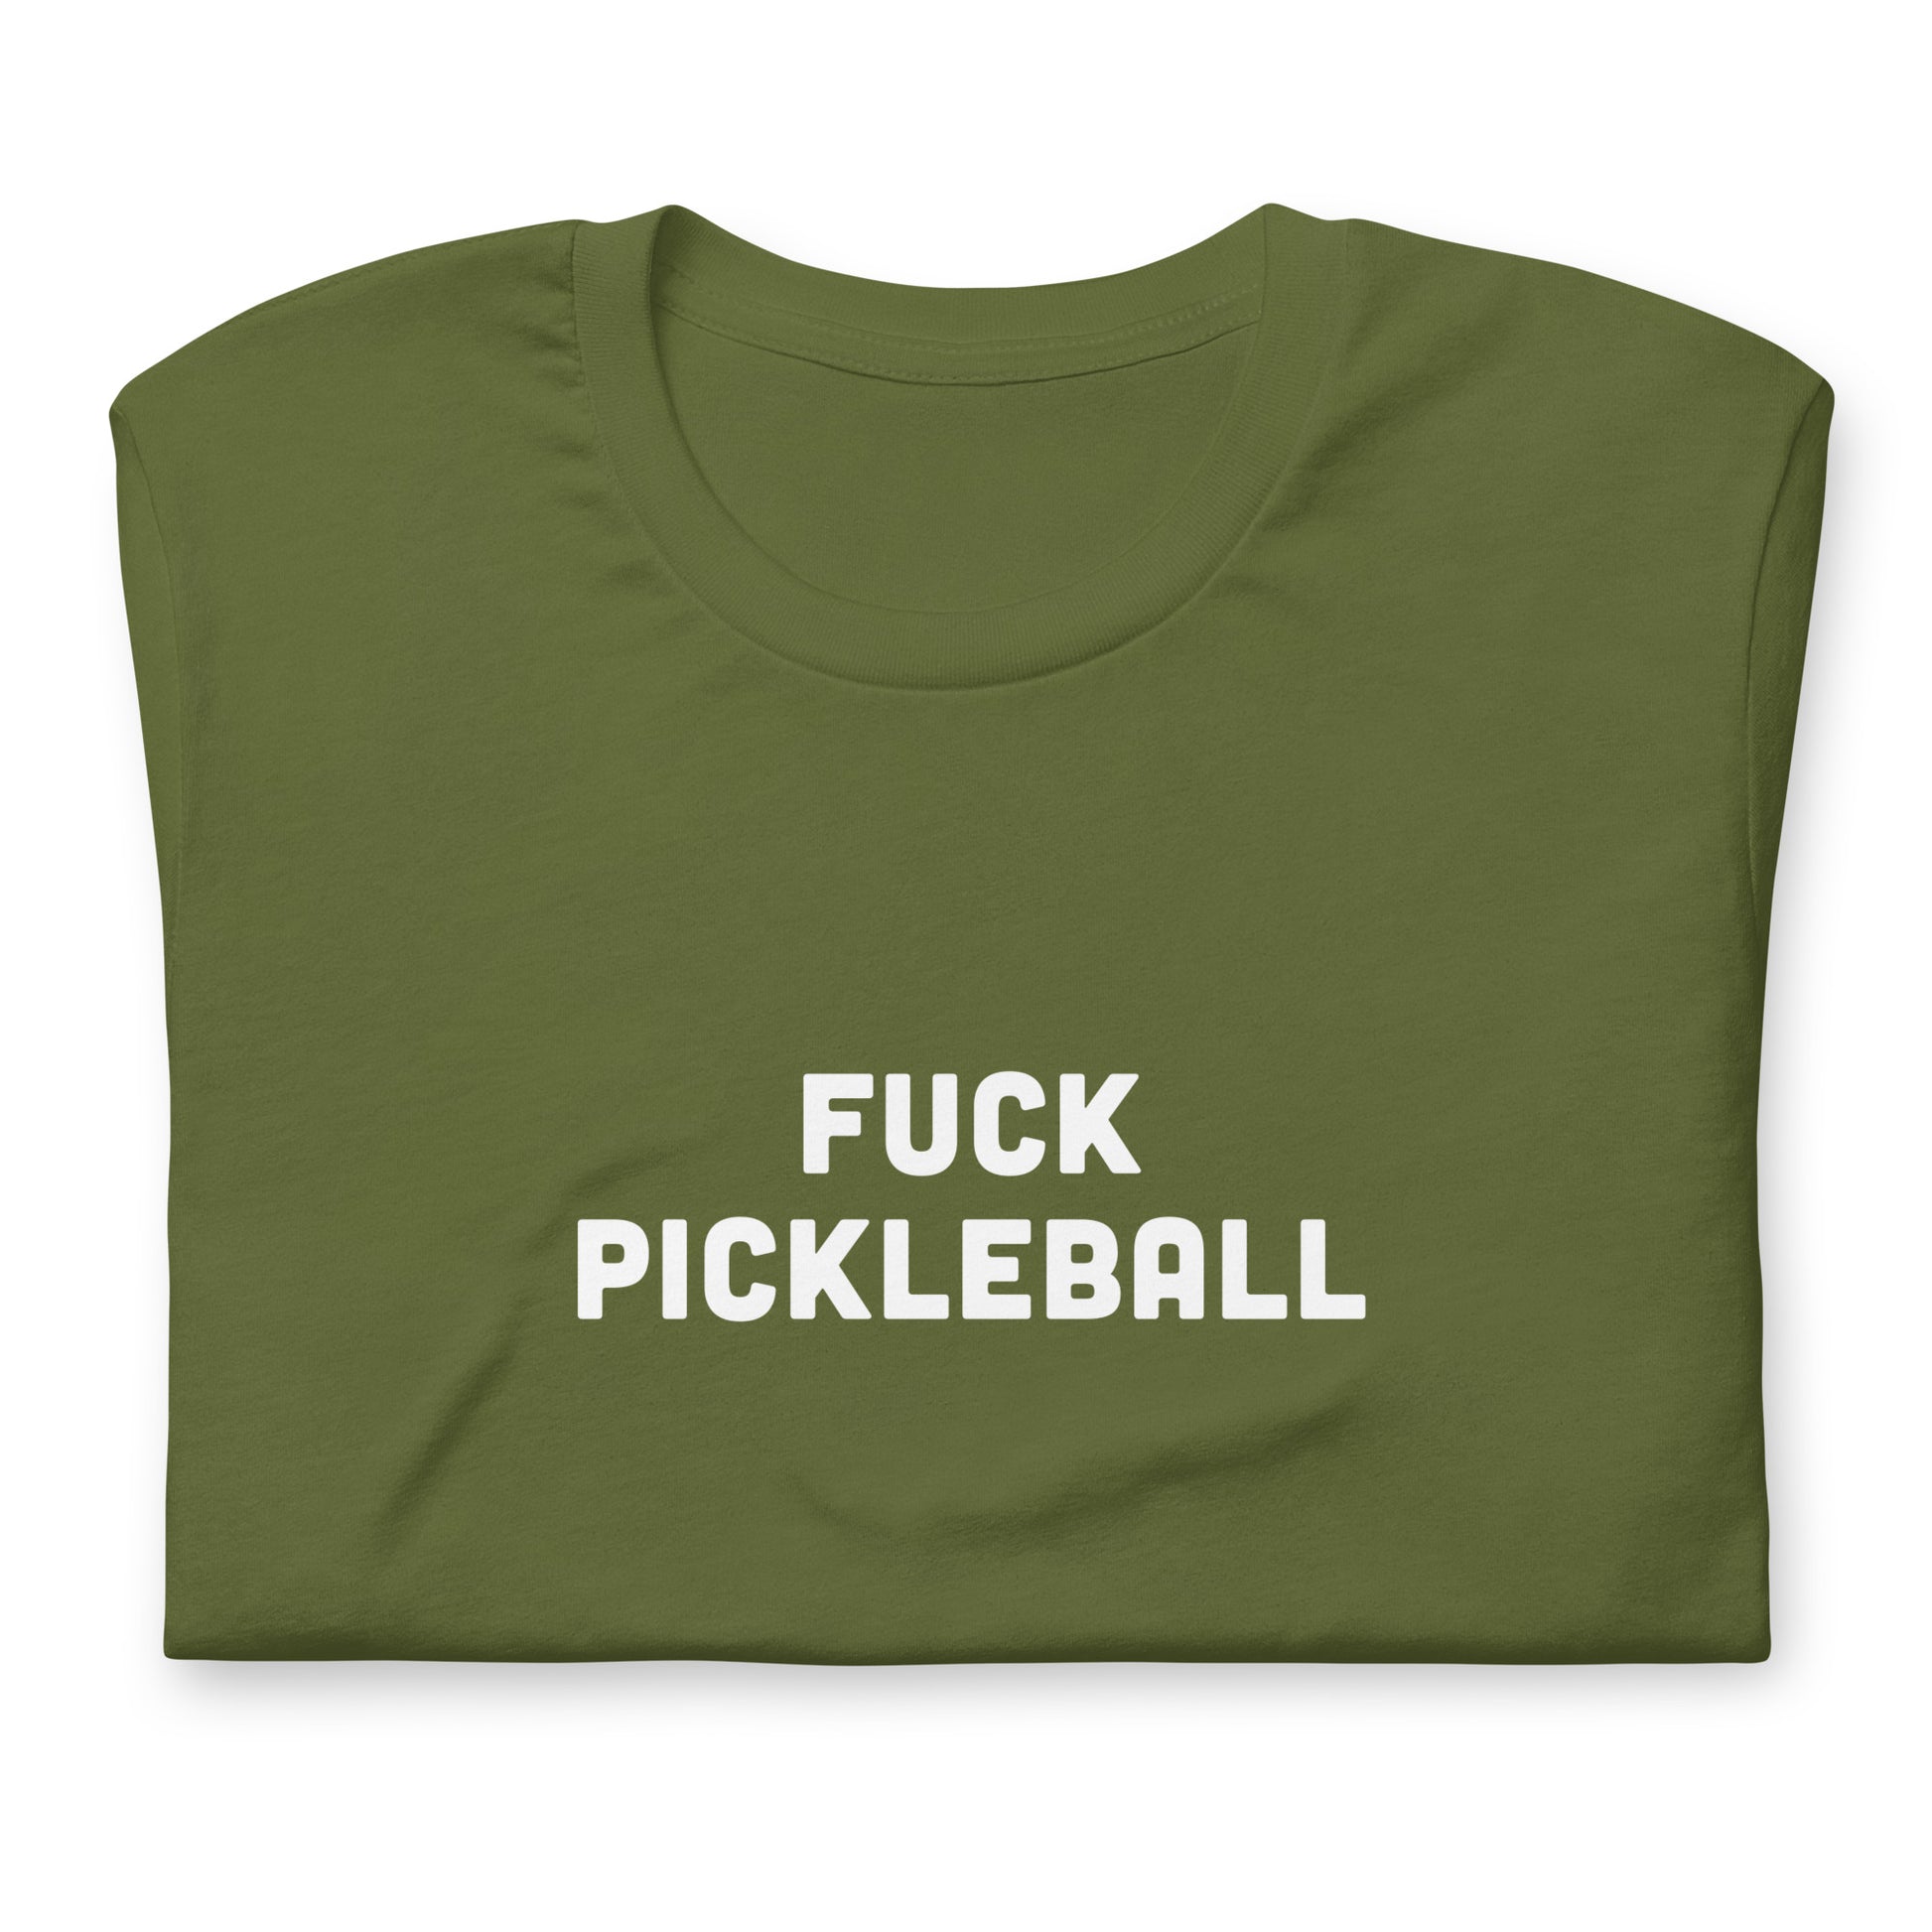 Fuck Pickleball T-Shirt Size 2XL Color Black